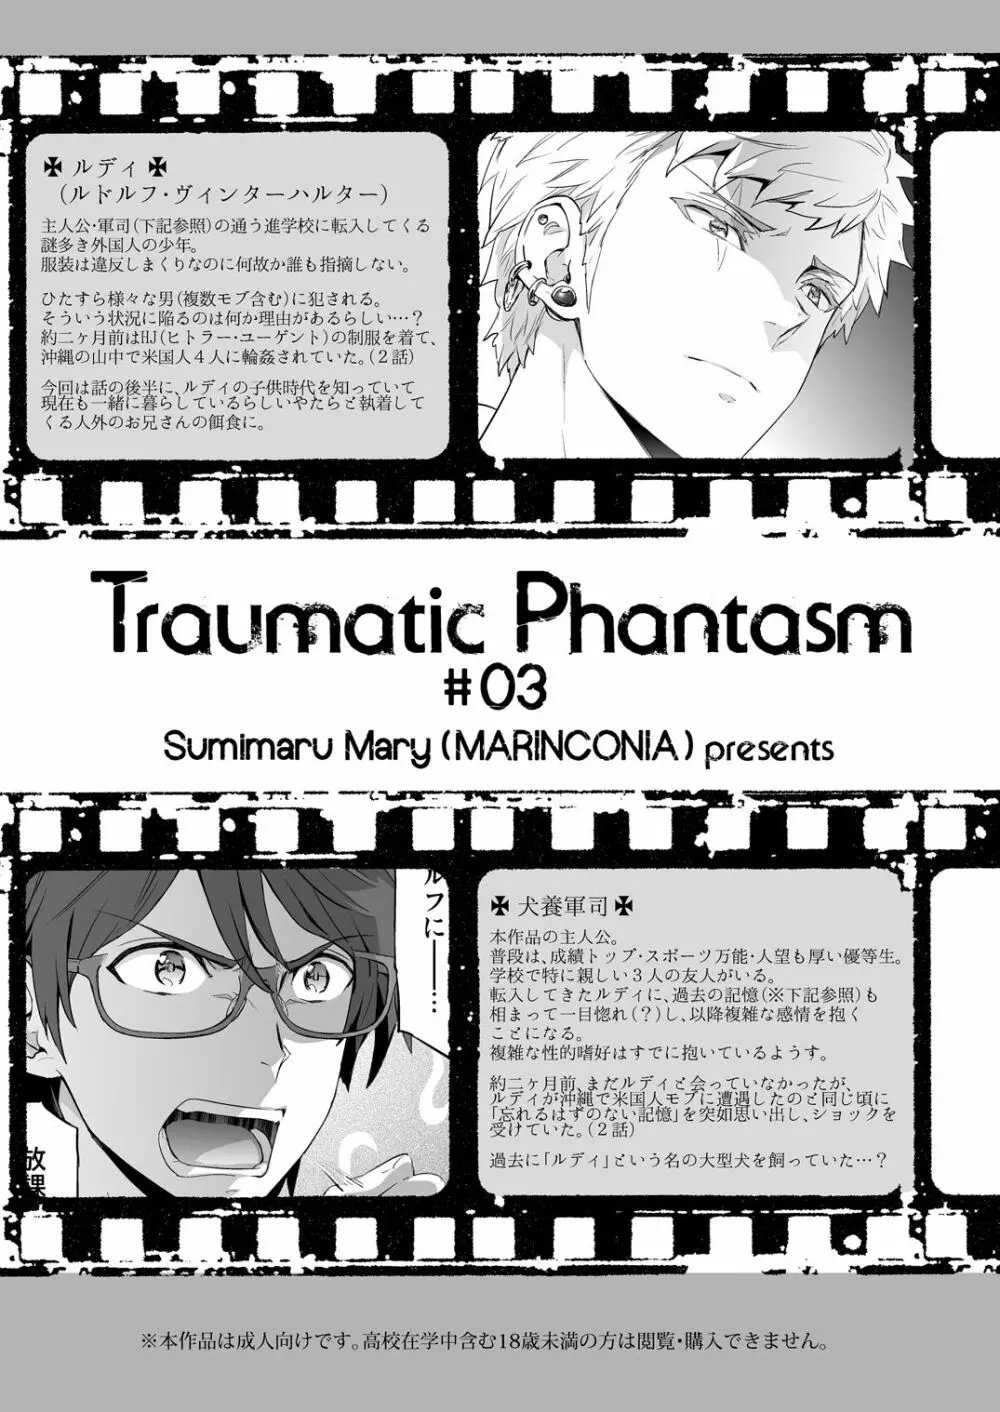 Traumatic Phantasm #03 3ページ